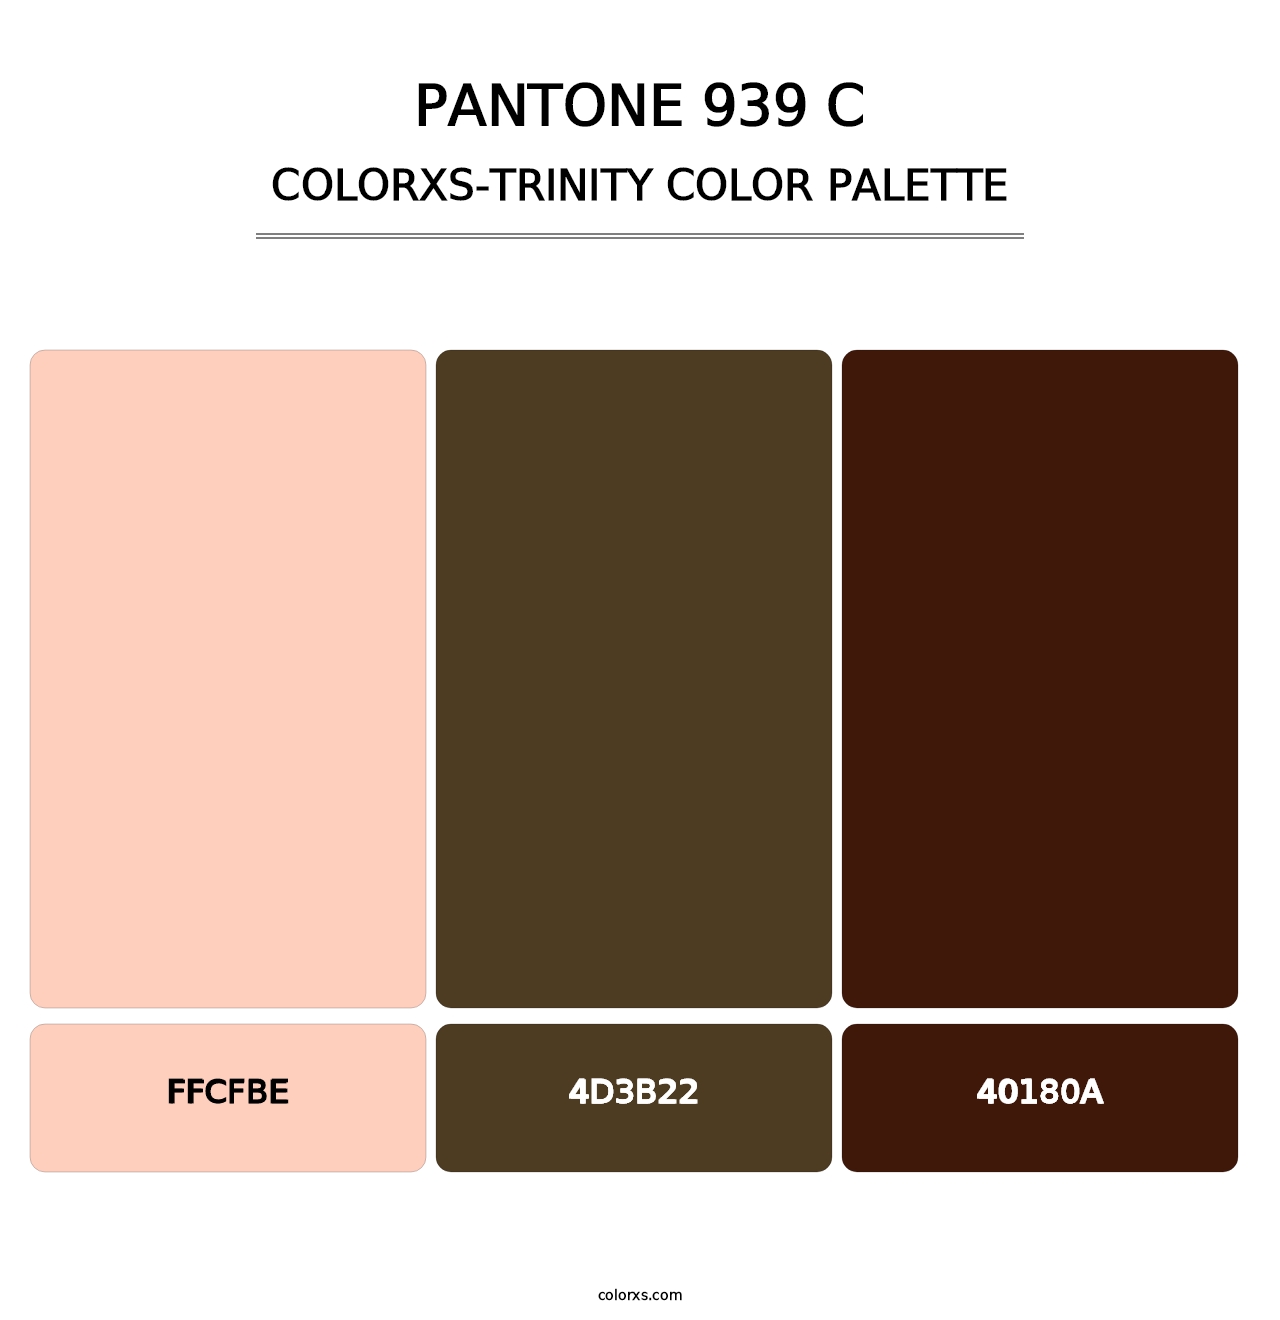 PANTONE 939 C - Colorxs Trinity Palette